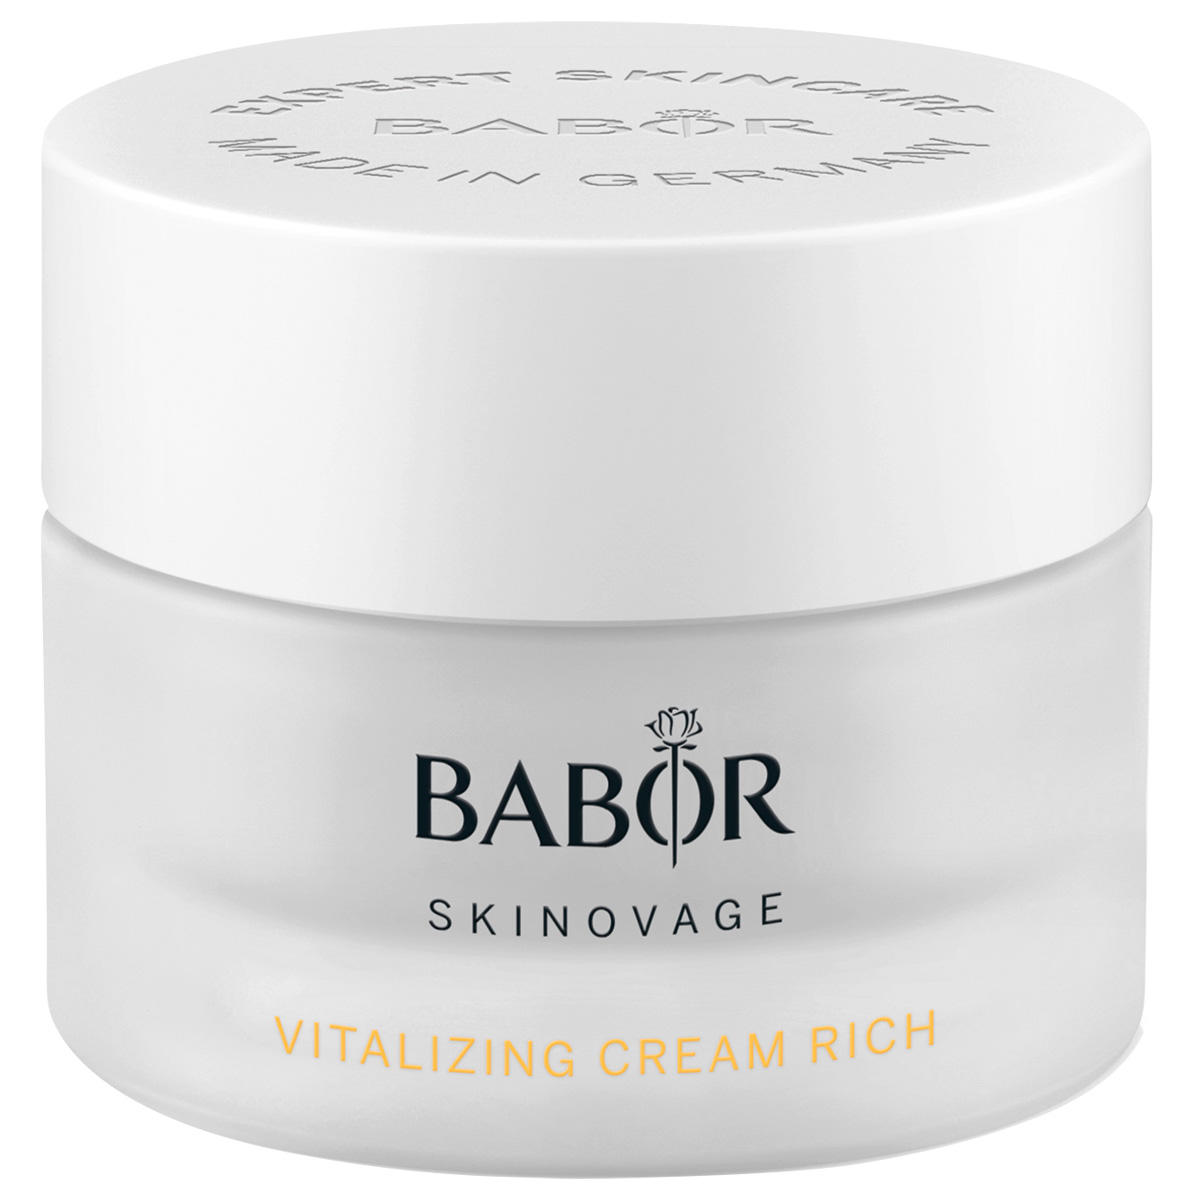 BABOR SKINOVAGE Vitalizing Cream rich 50 ml - 1